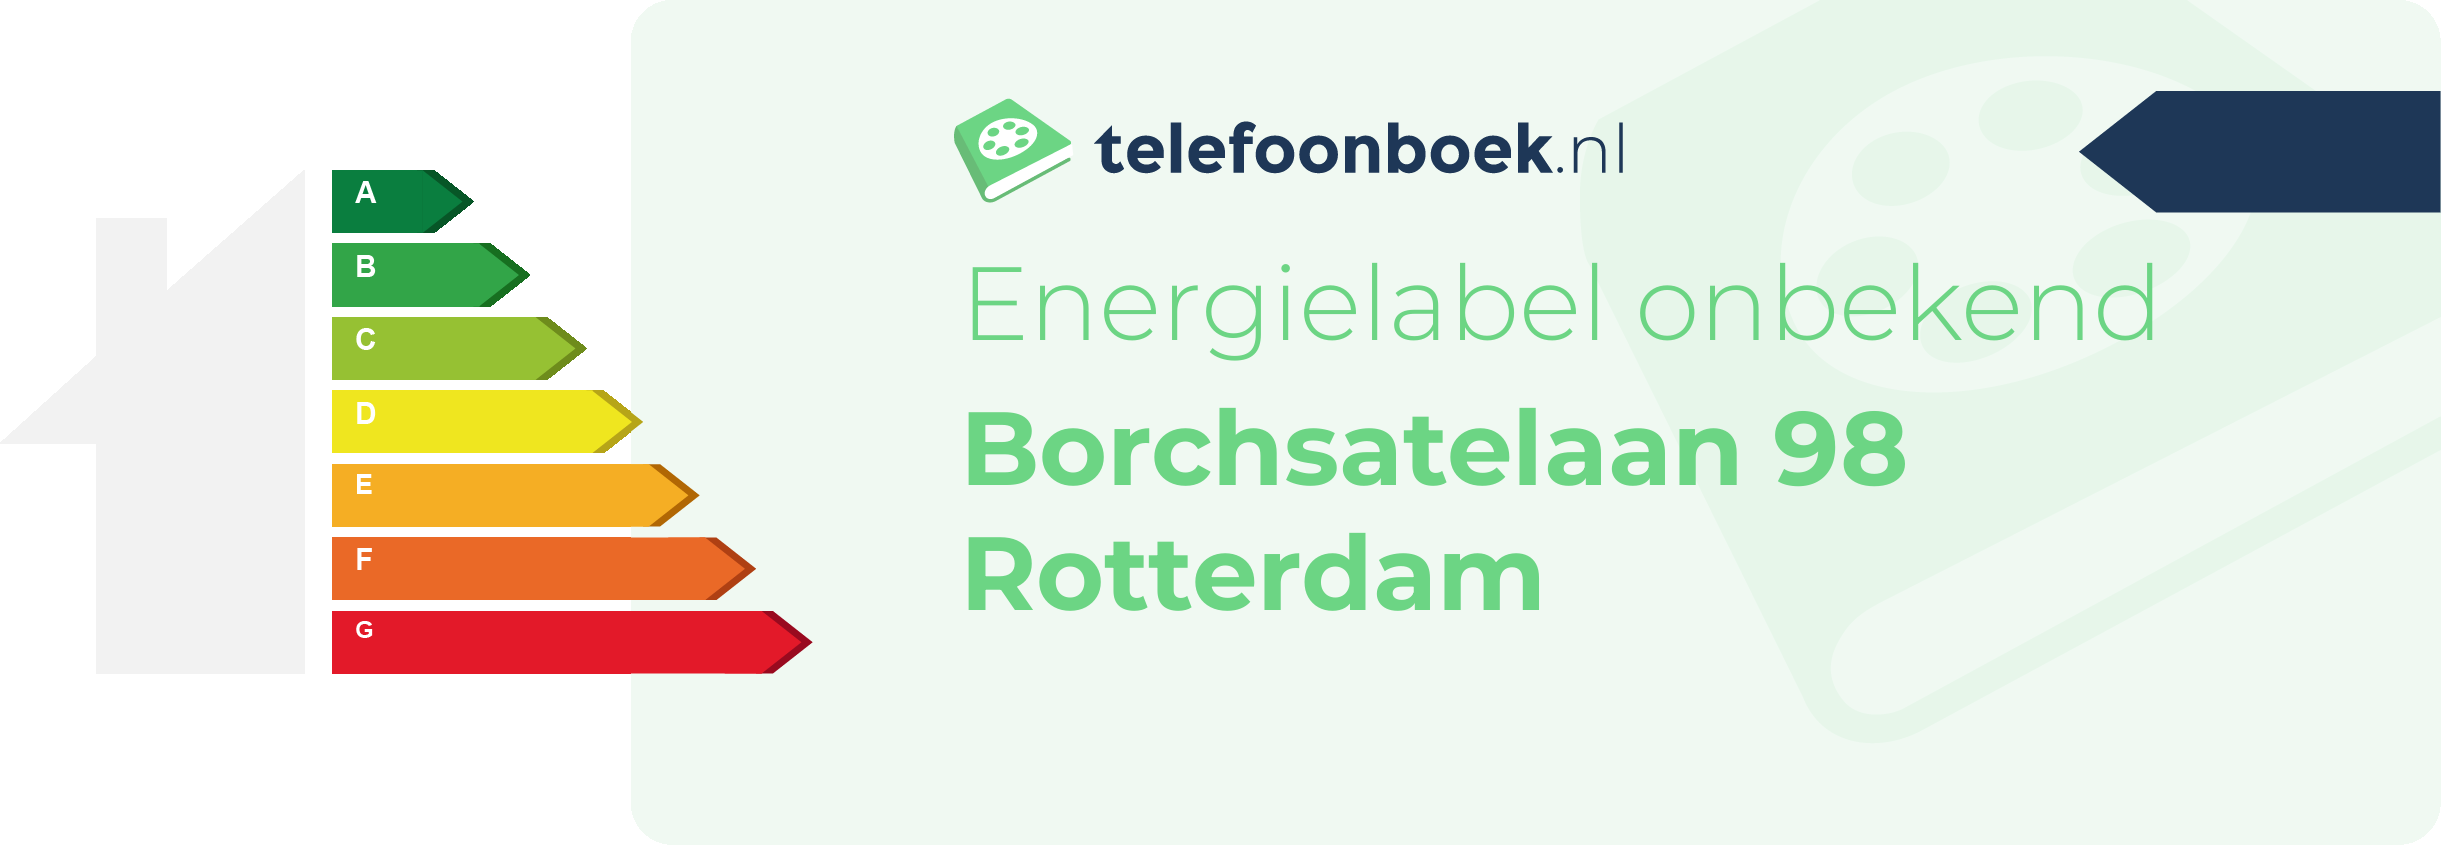 Energielabel Borchsatelaan 98 Rotterdam